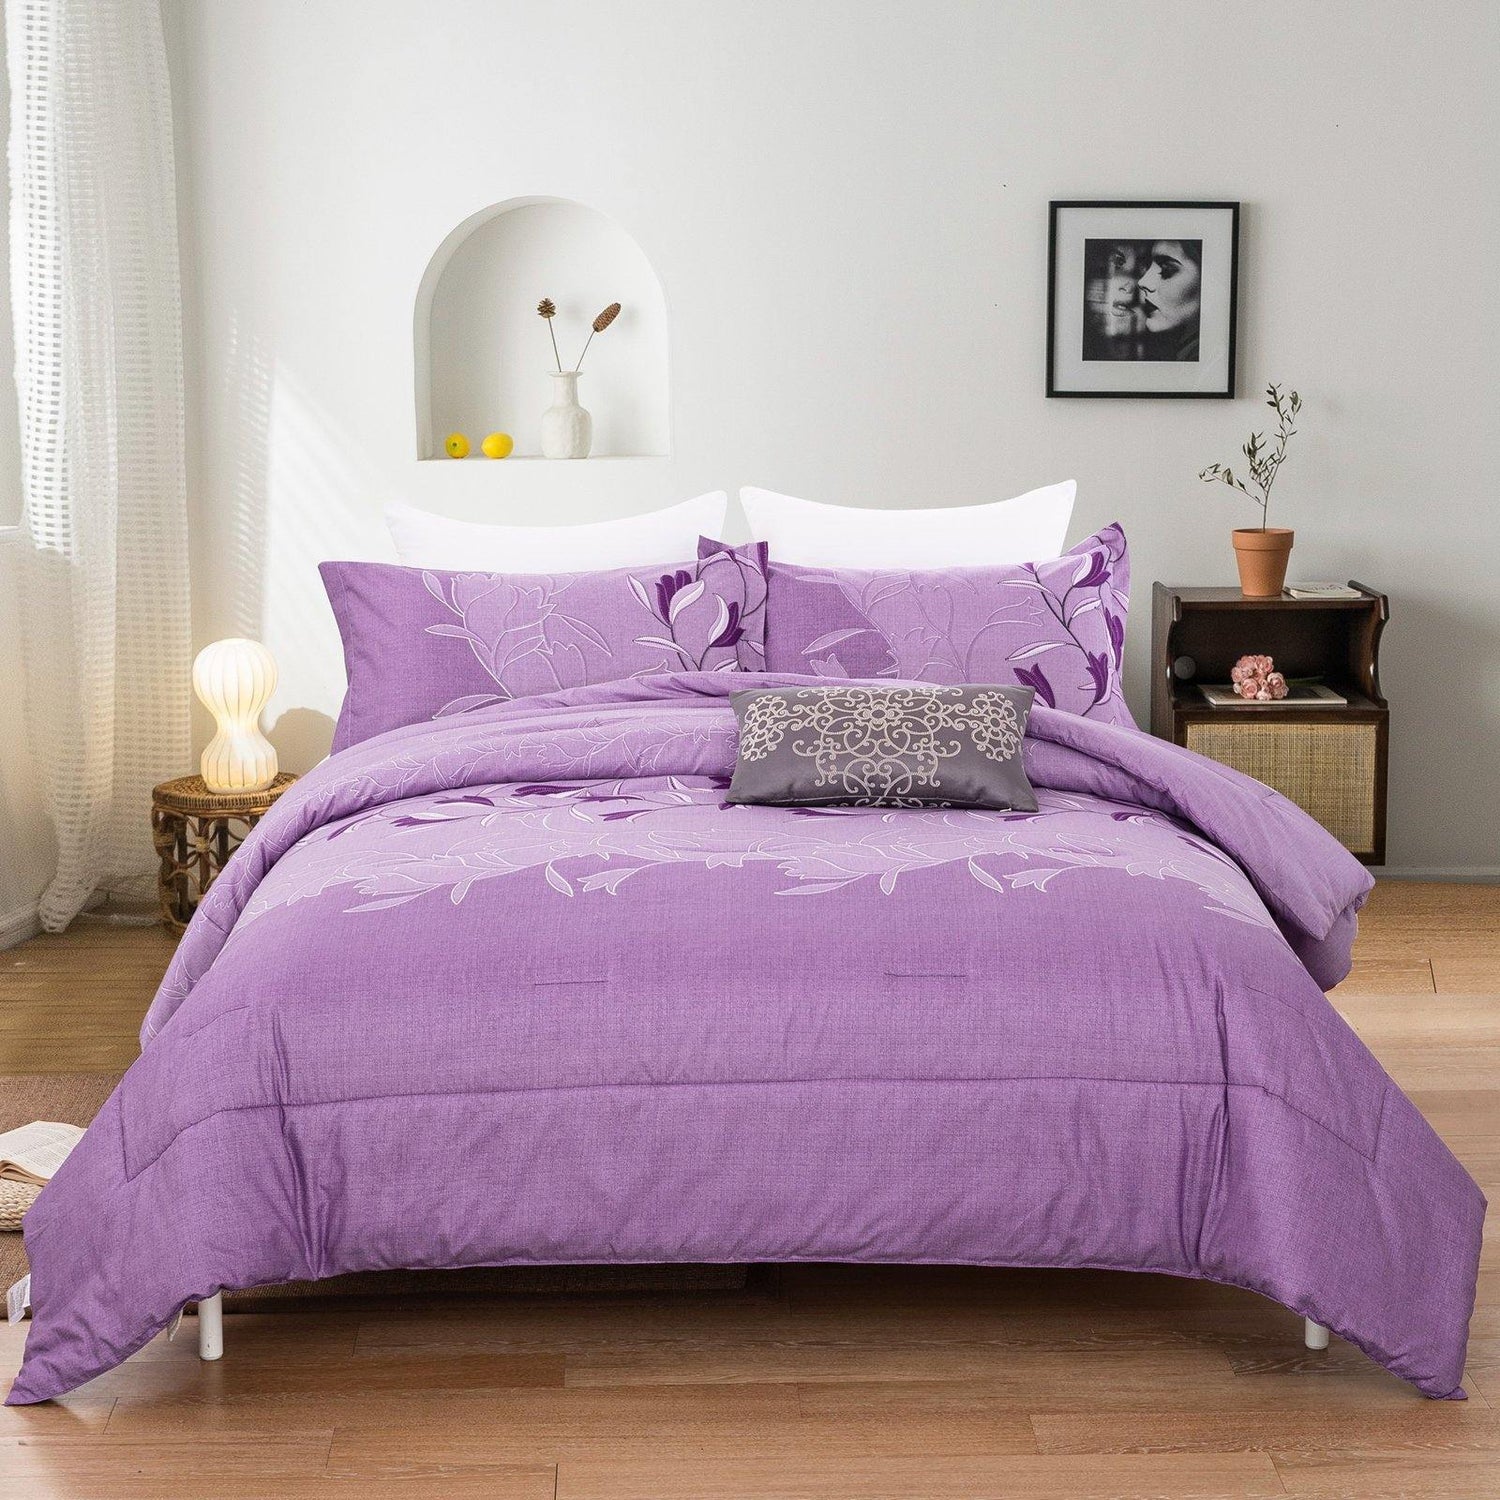 WONGS BEDDING Purple print Comforter set 3 Pieces Bedding Comforter with 2 Pillow Cases - Wongs bedding